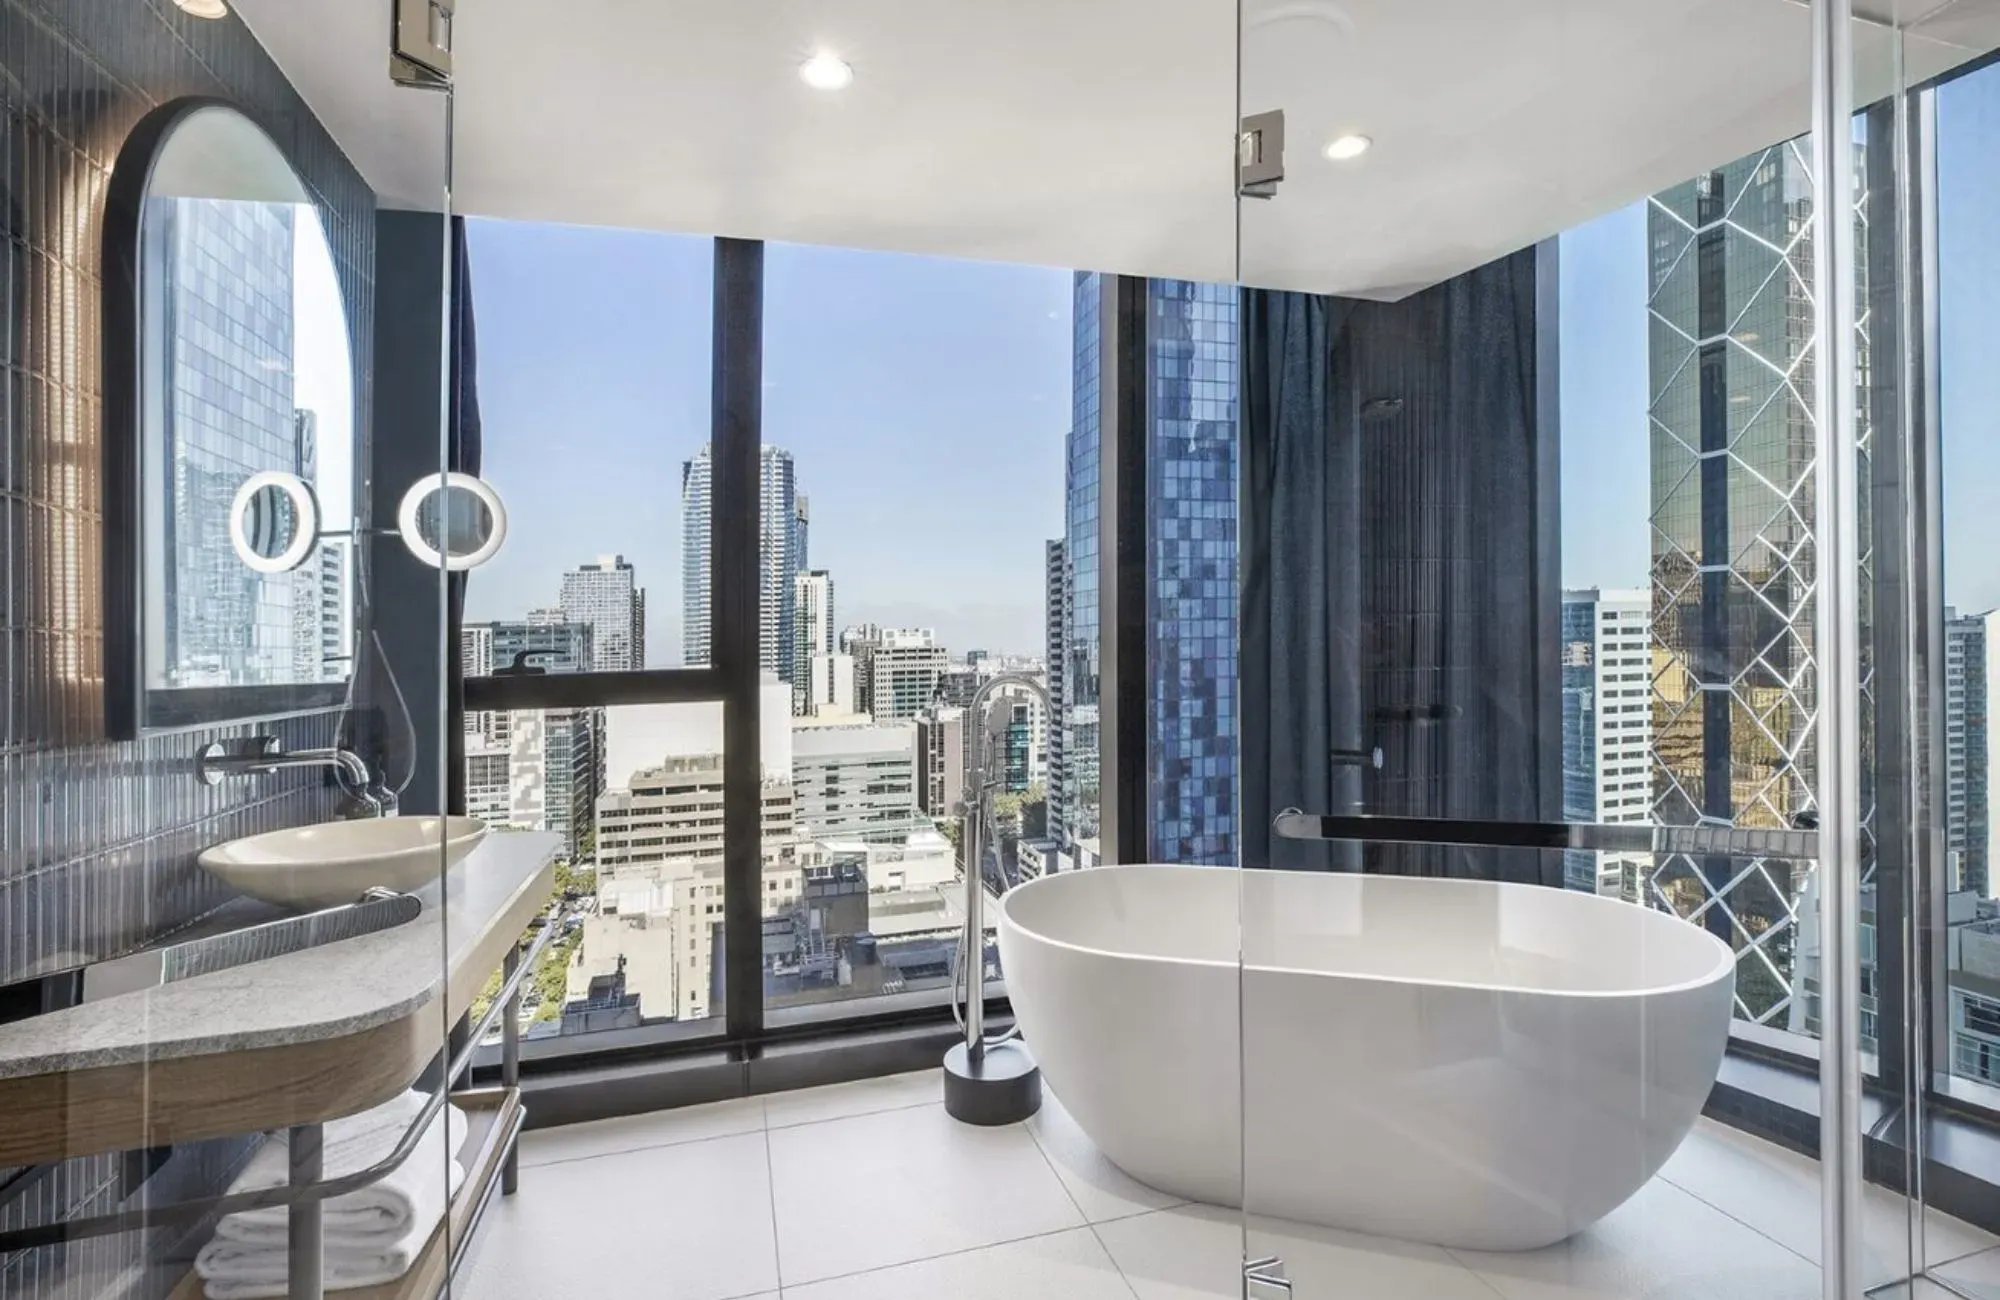 Voco Melbourne Central by IHG Hotels & Resorts. Guest bathroom, featuring large bathtub. 